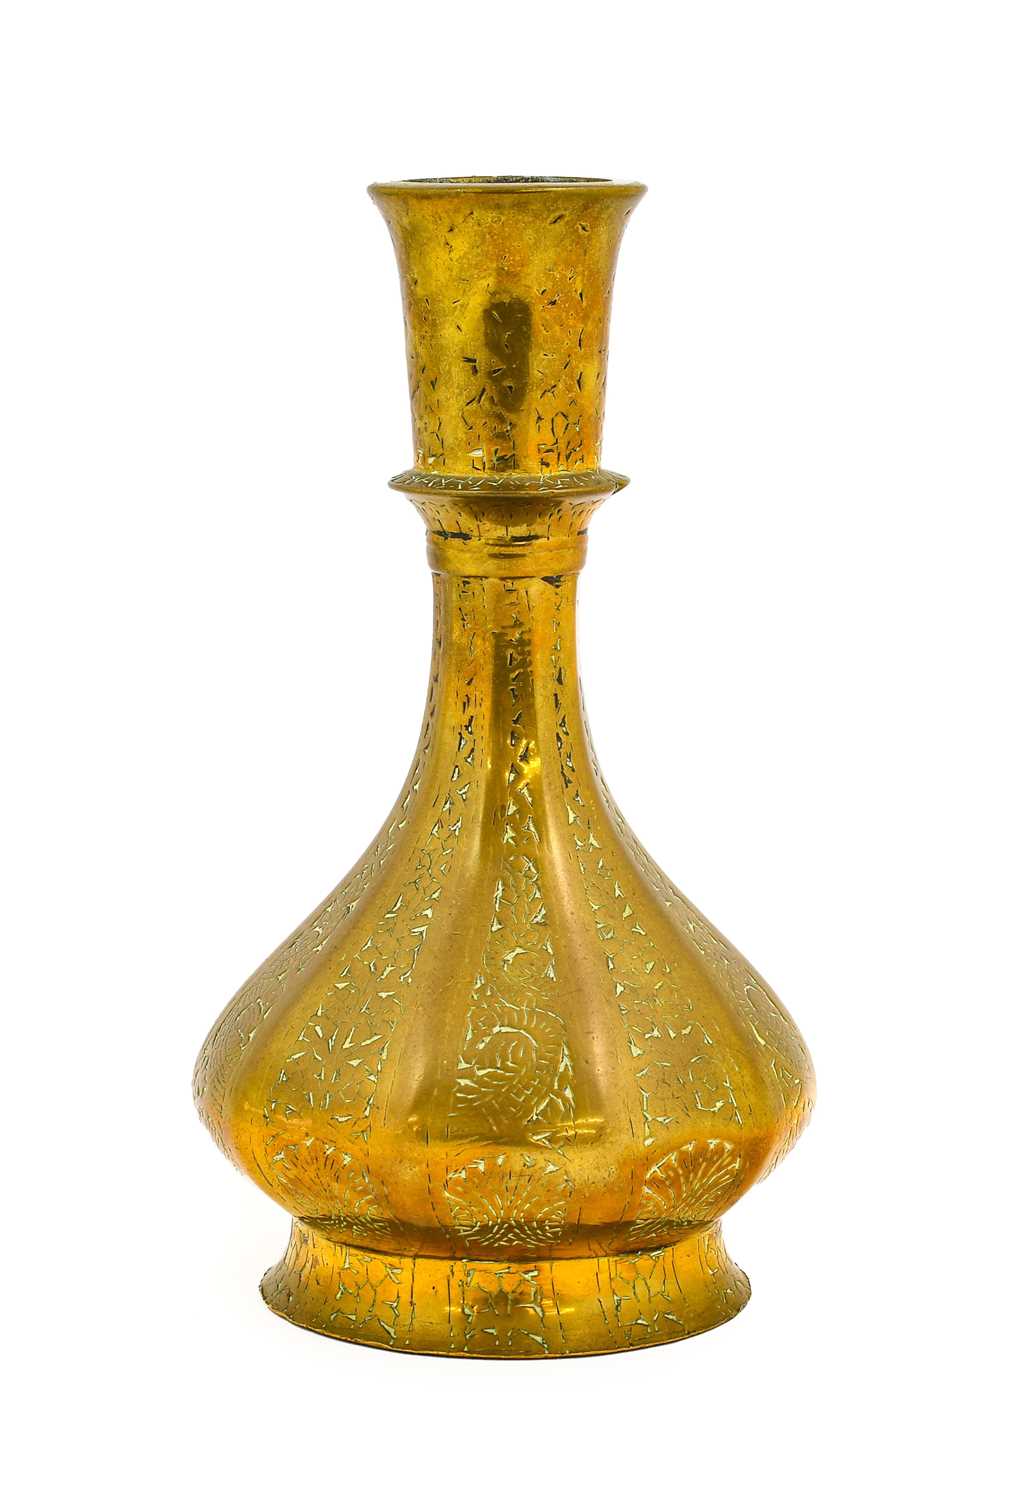 Lot 50 - A Persian Copper Alloy Bottle Vase, 19th...